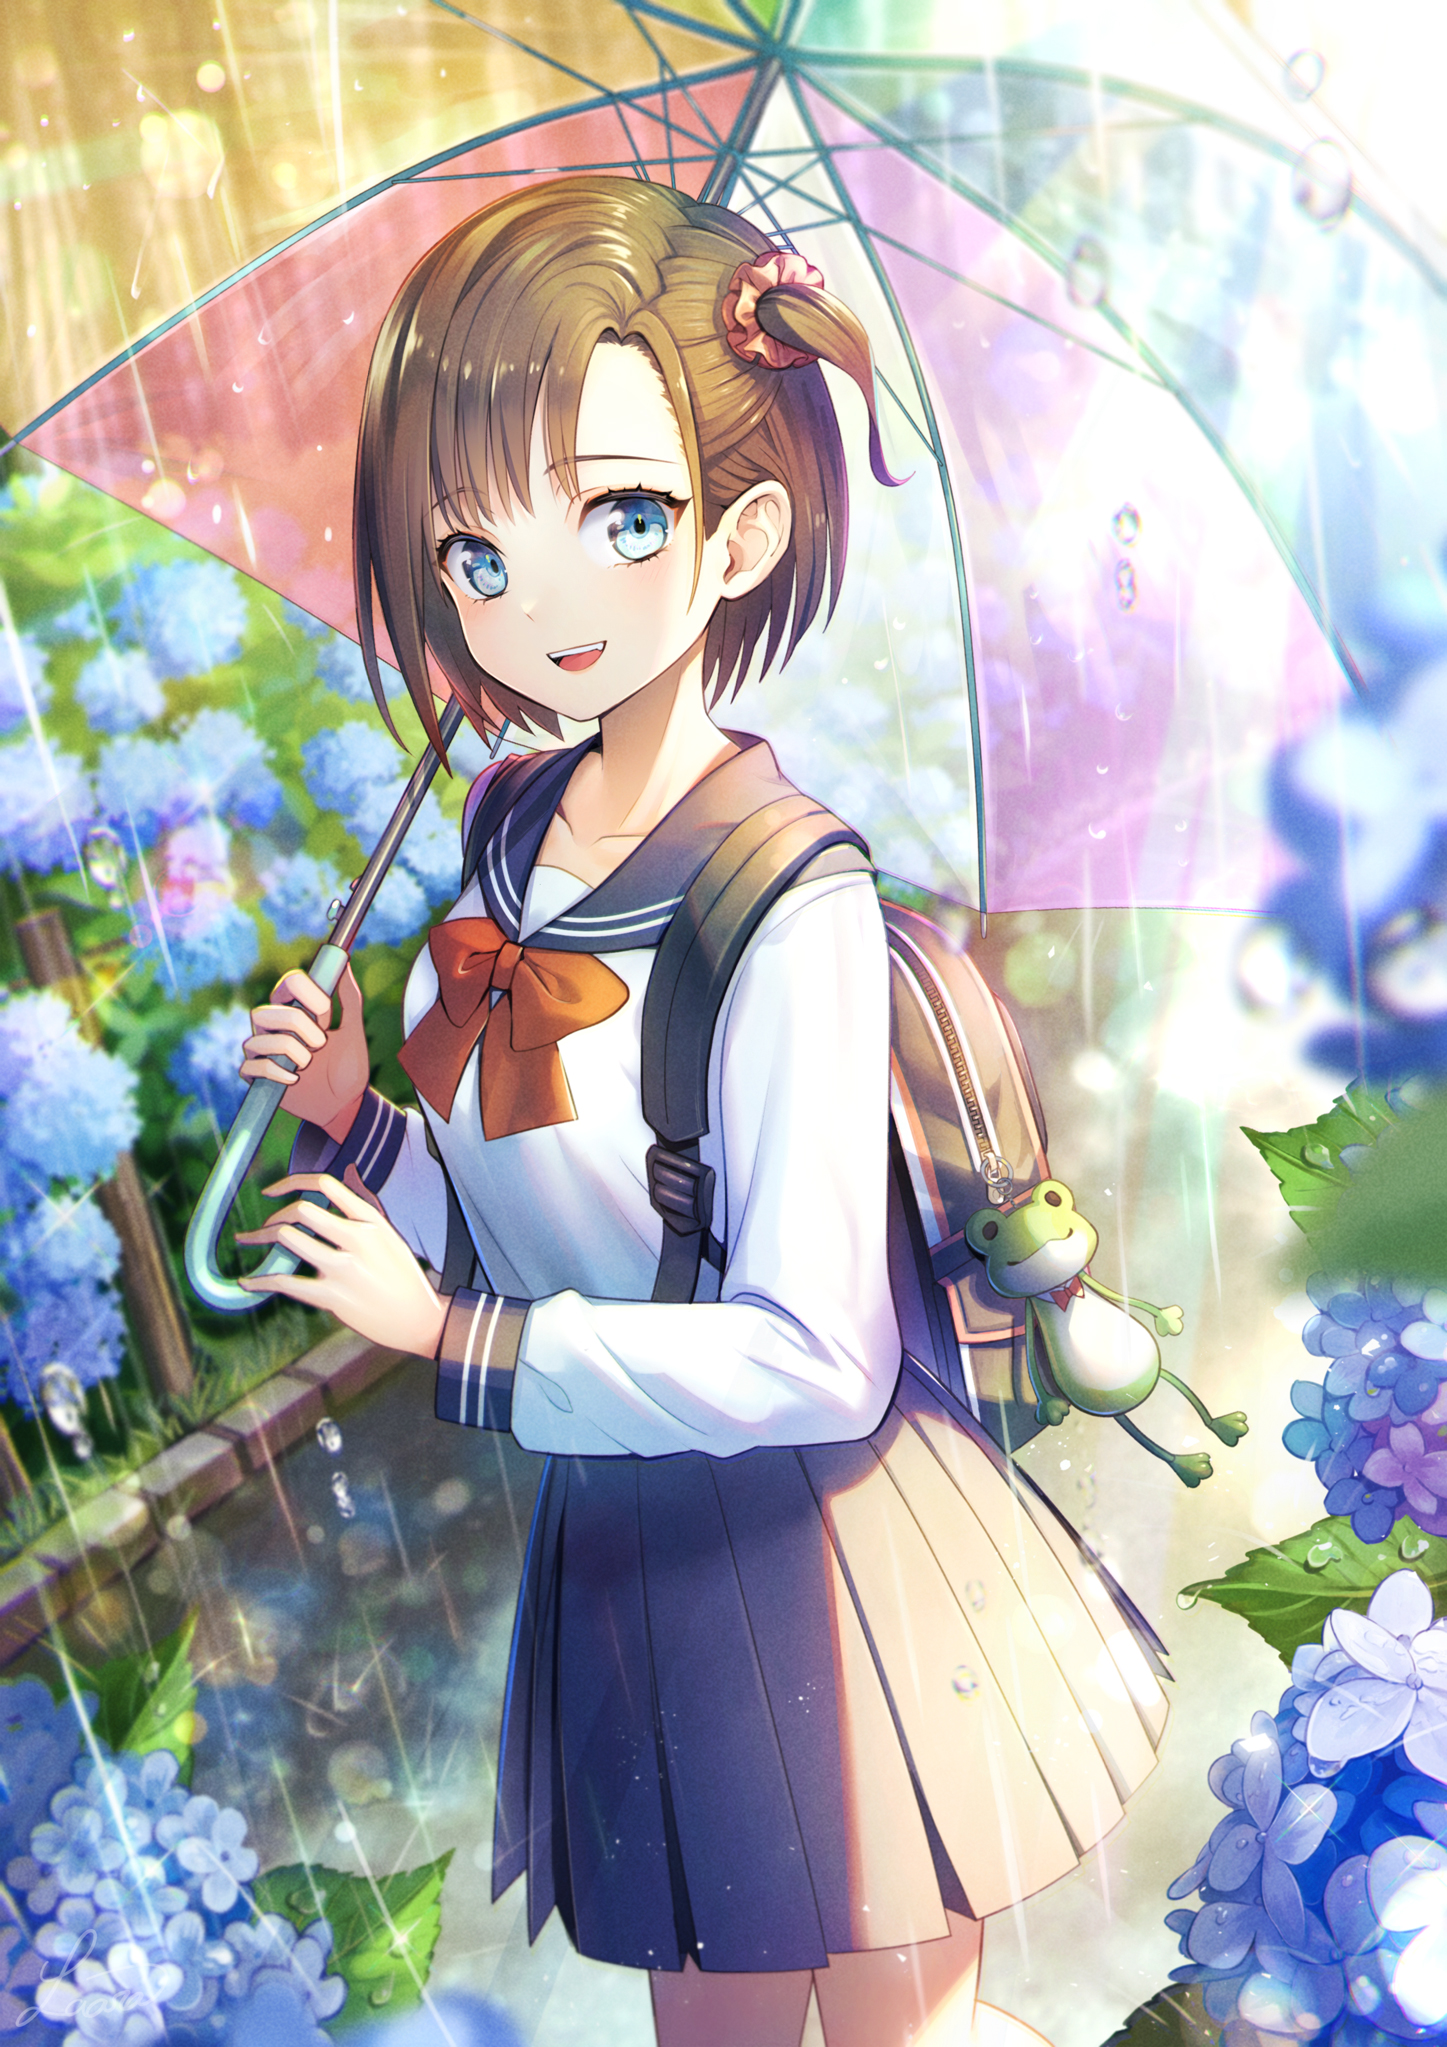 Anime 1447x2047 anime anime girls original characters solo artwork digital art fan art umbrella schoolgirl school uniform rain flowers blue eyes